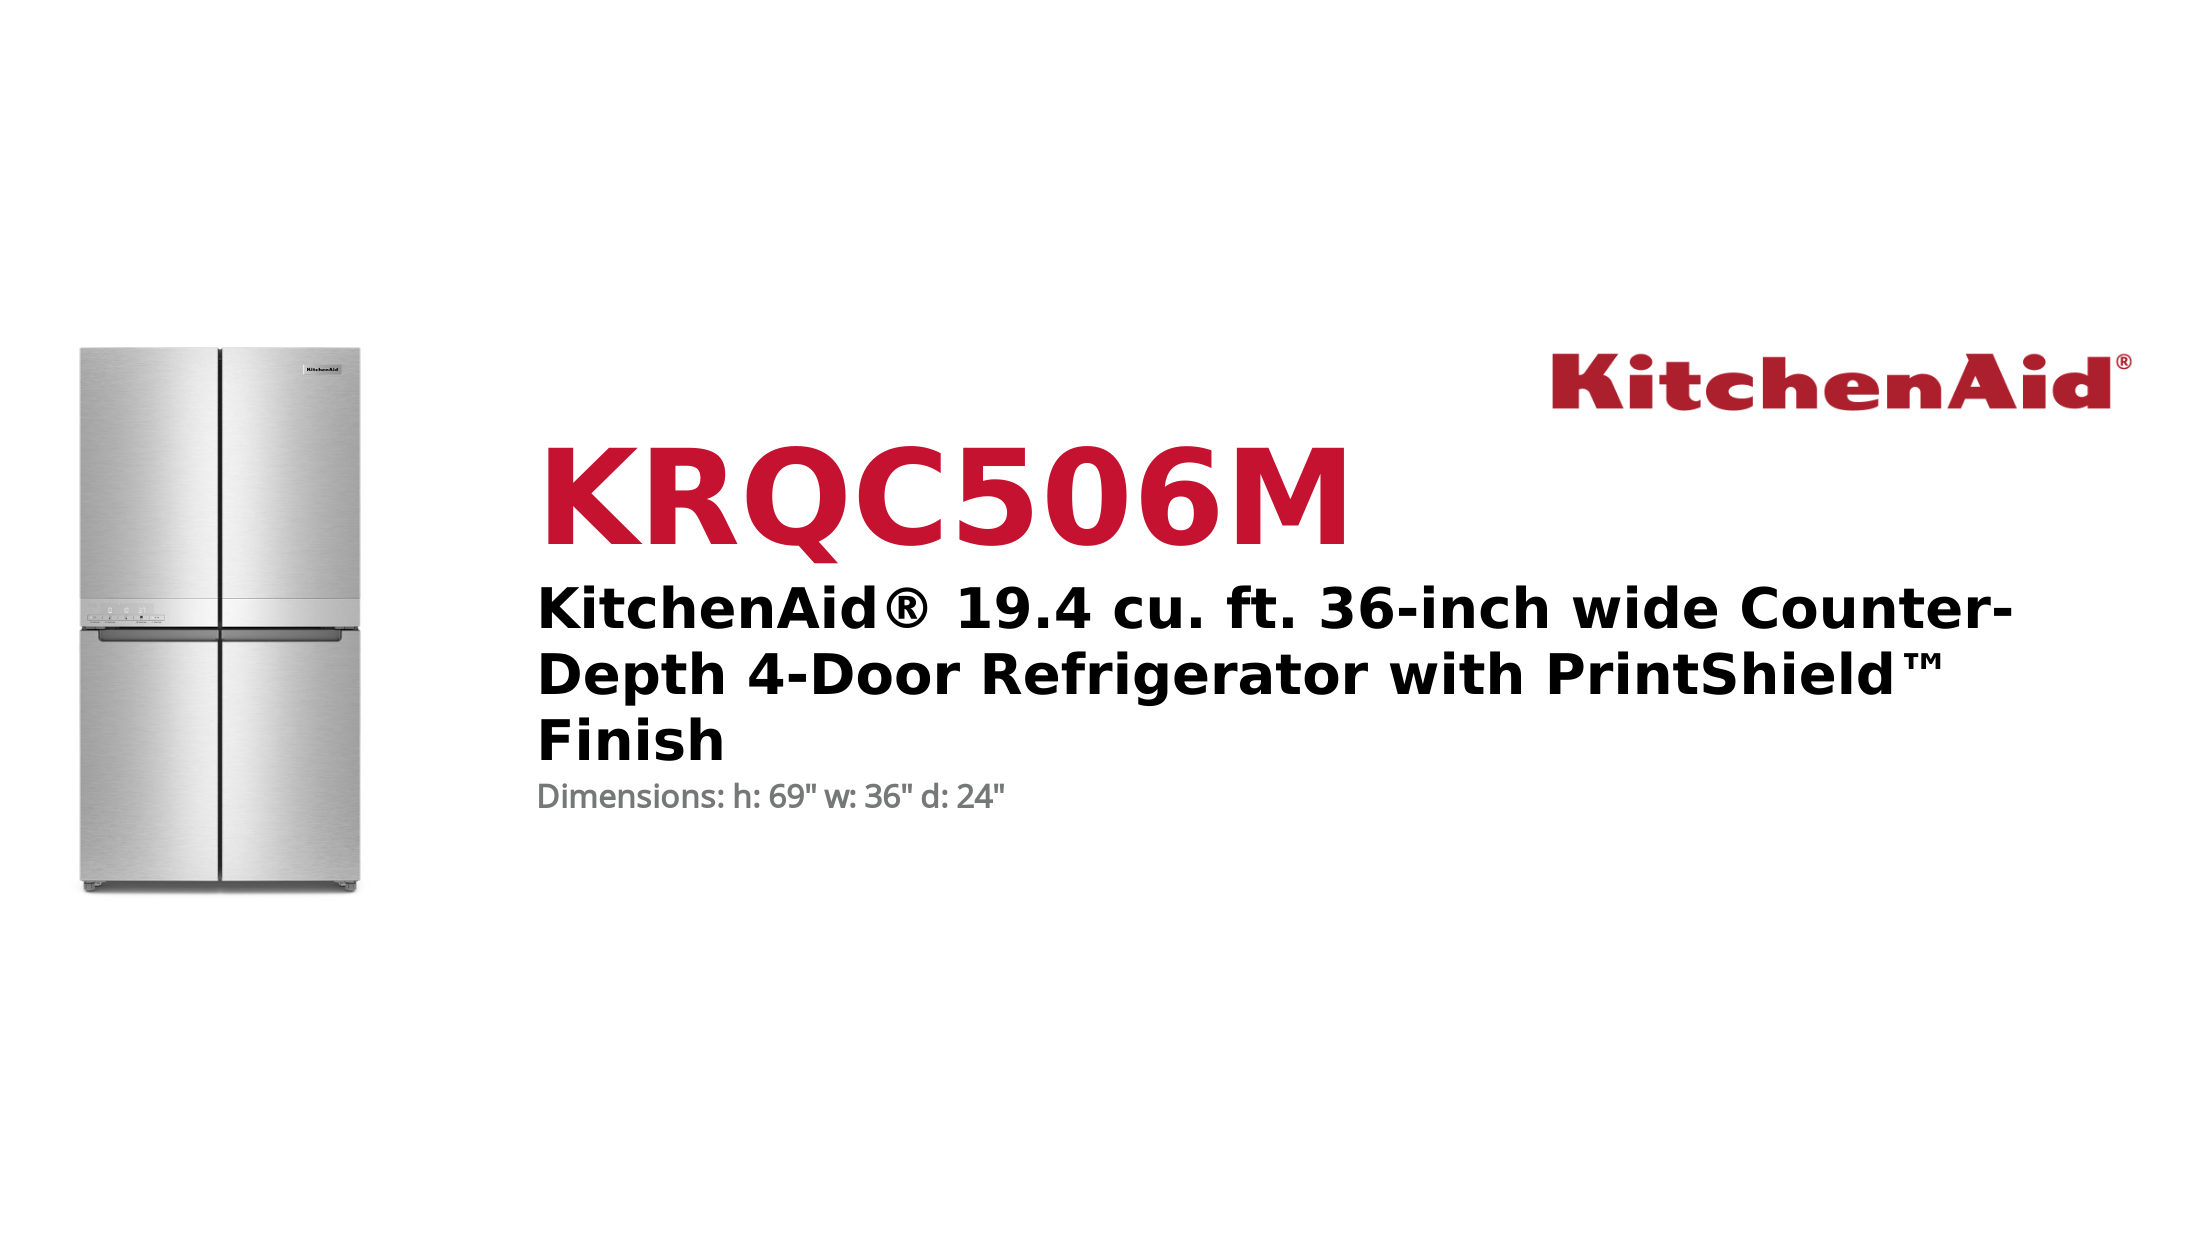 KitchenAid® 19.4 cu. ft. 36-inch wide Counter-Depth 4-Door Refrigerator with PrintShield™ Finish